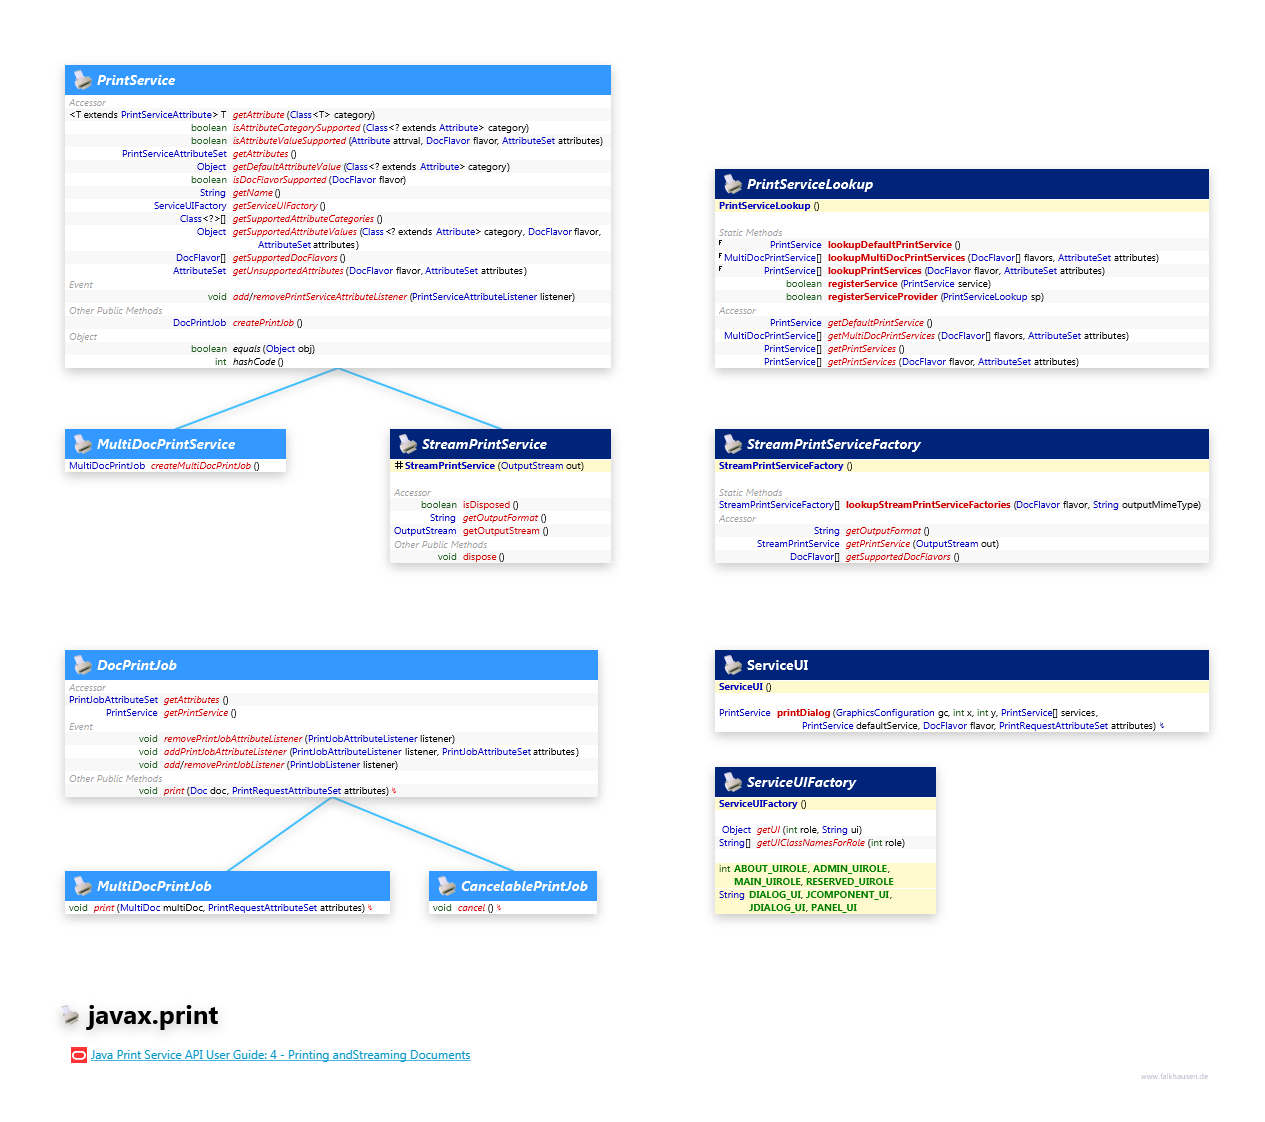 javax.print PrintService class diagram and api documentation for Java 8